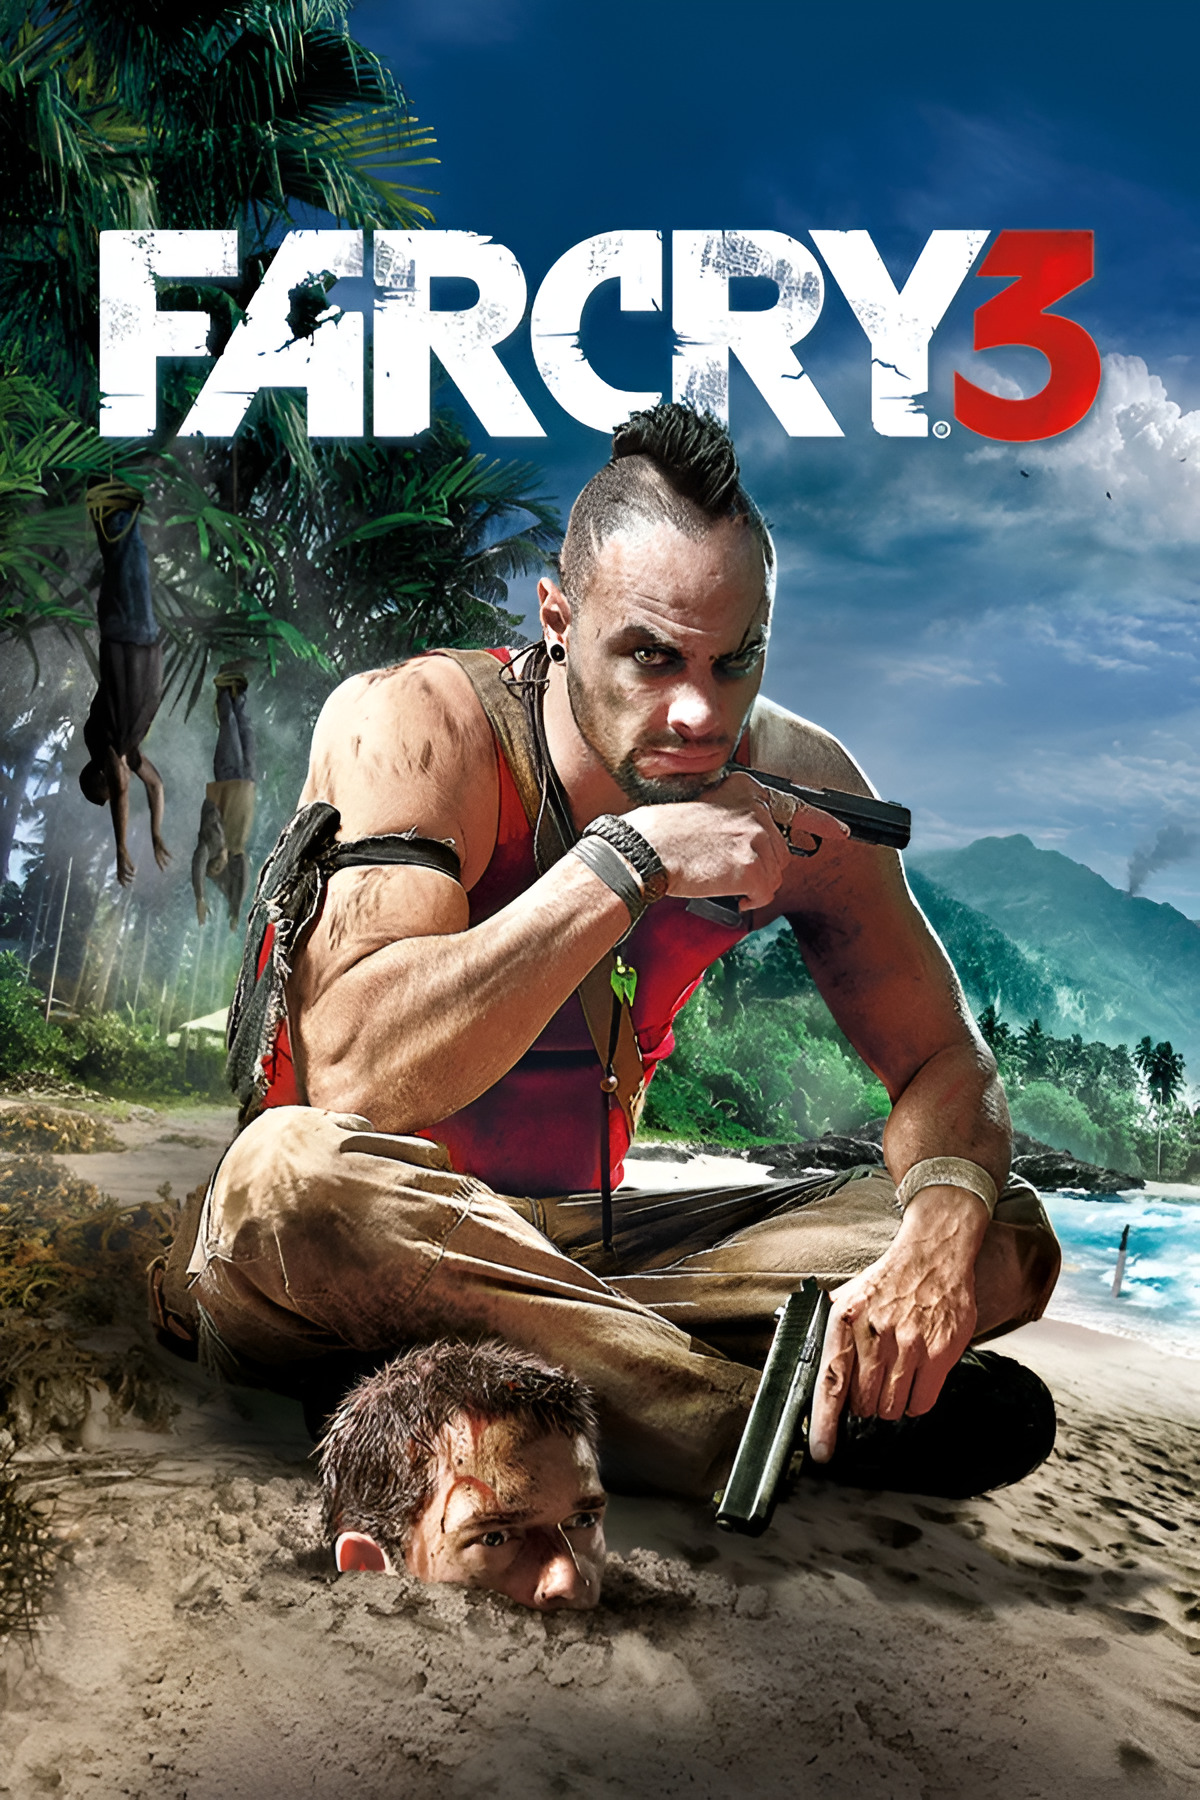 Far Cry Primal - Metacritic